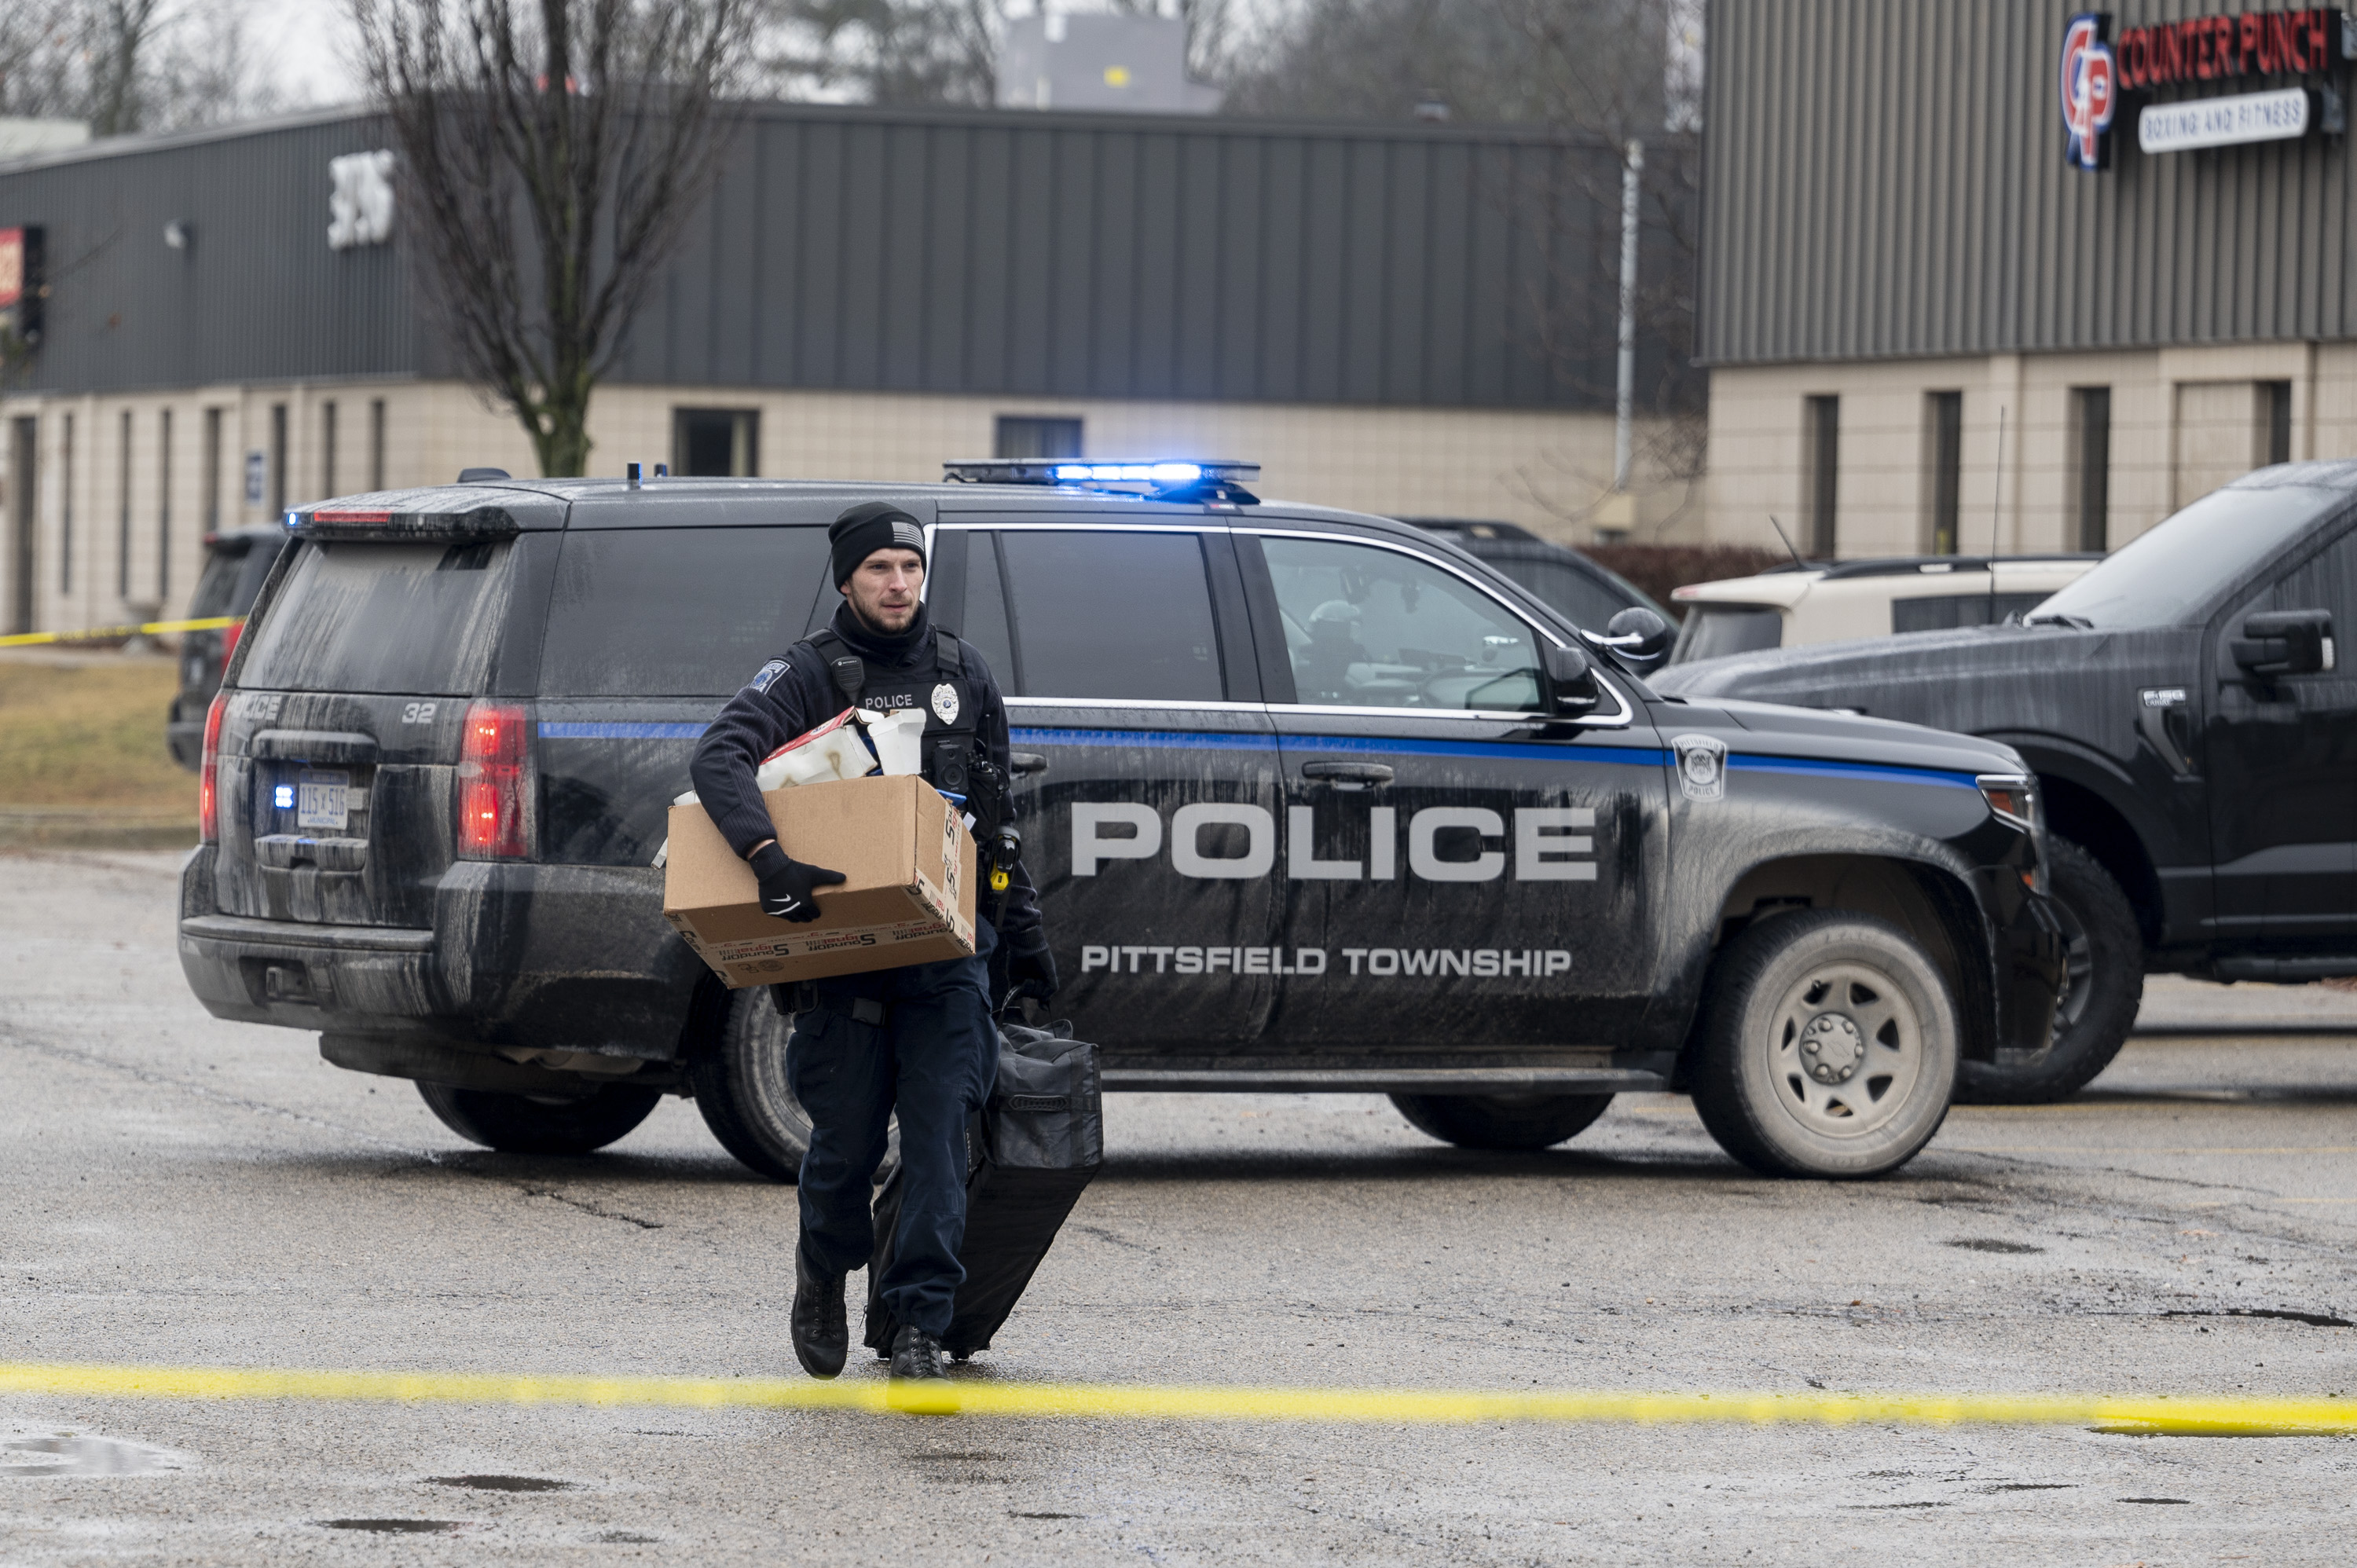 Waterproofing business, breakup at heart of homicide outside Ann Arbor